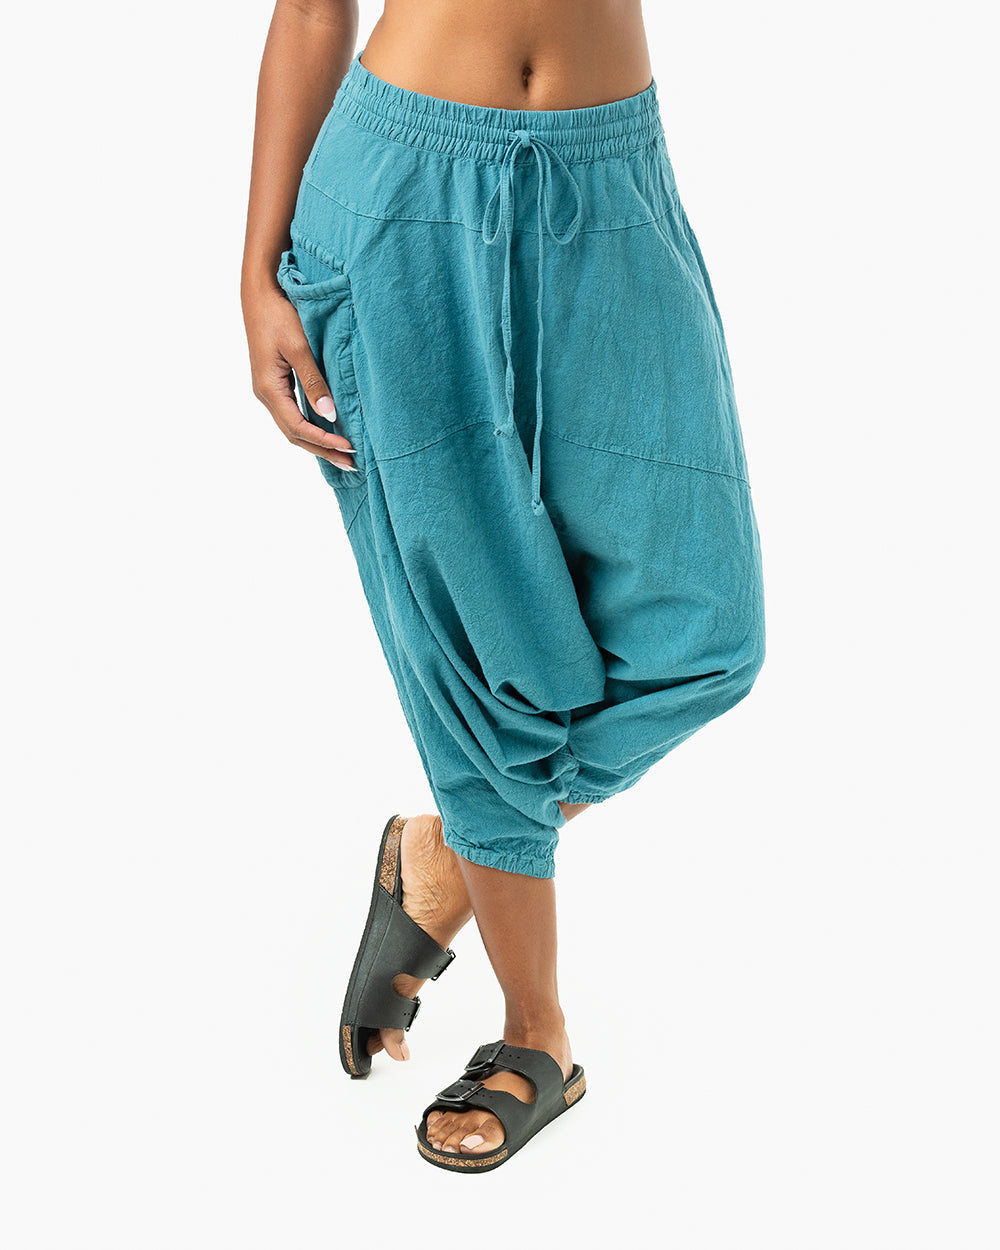  Buddha Pants Premium Cotton Harem Pants Womens Blue Zags  Pattern (XX-Small, Blue) : Clothing, Shoes & Jewelry